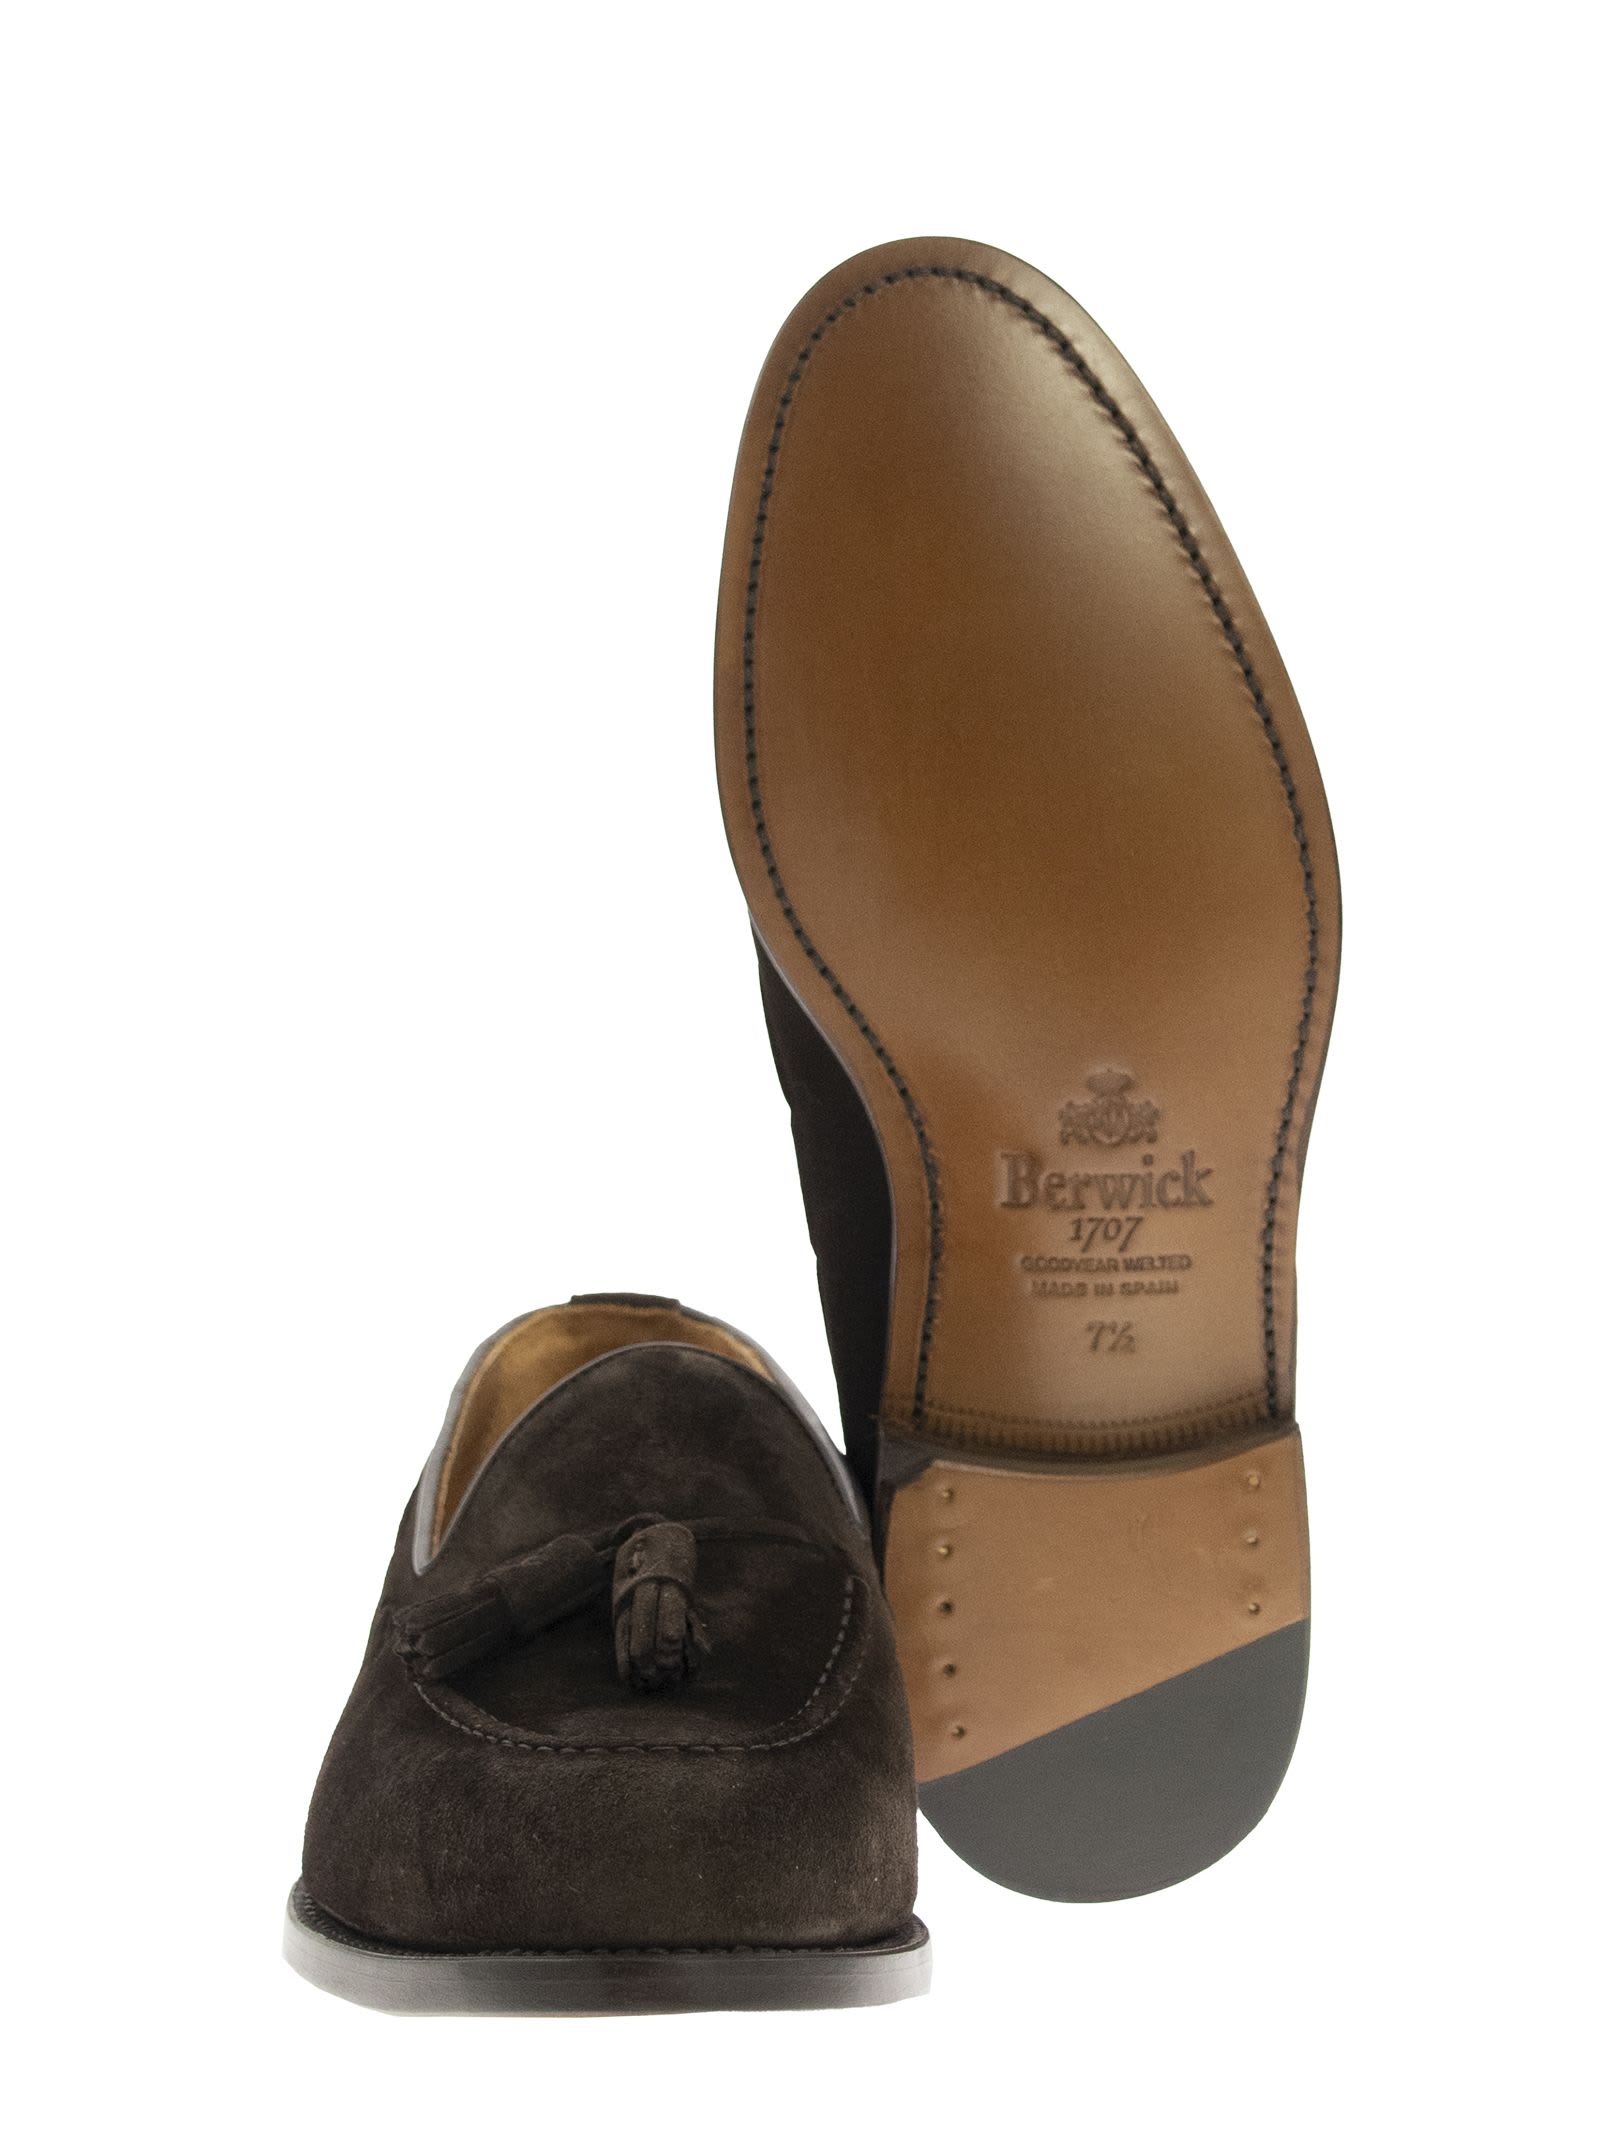 Berwick 1707 Loafers \u0026 Boat Shoes 